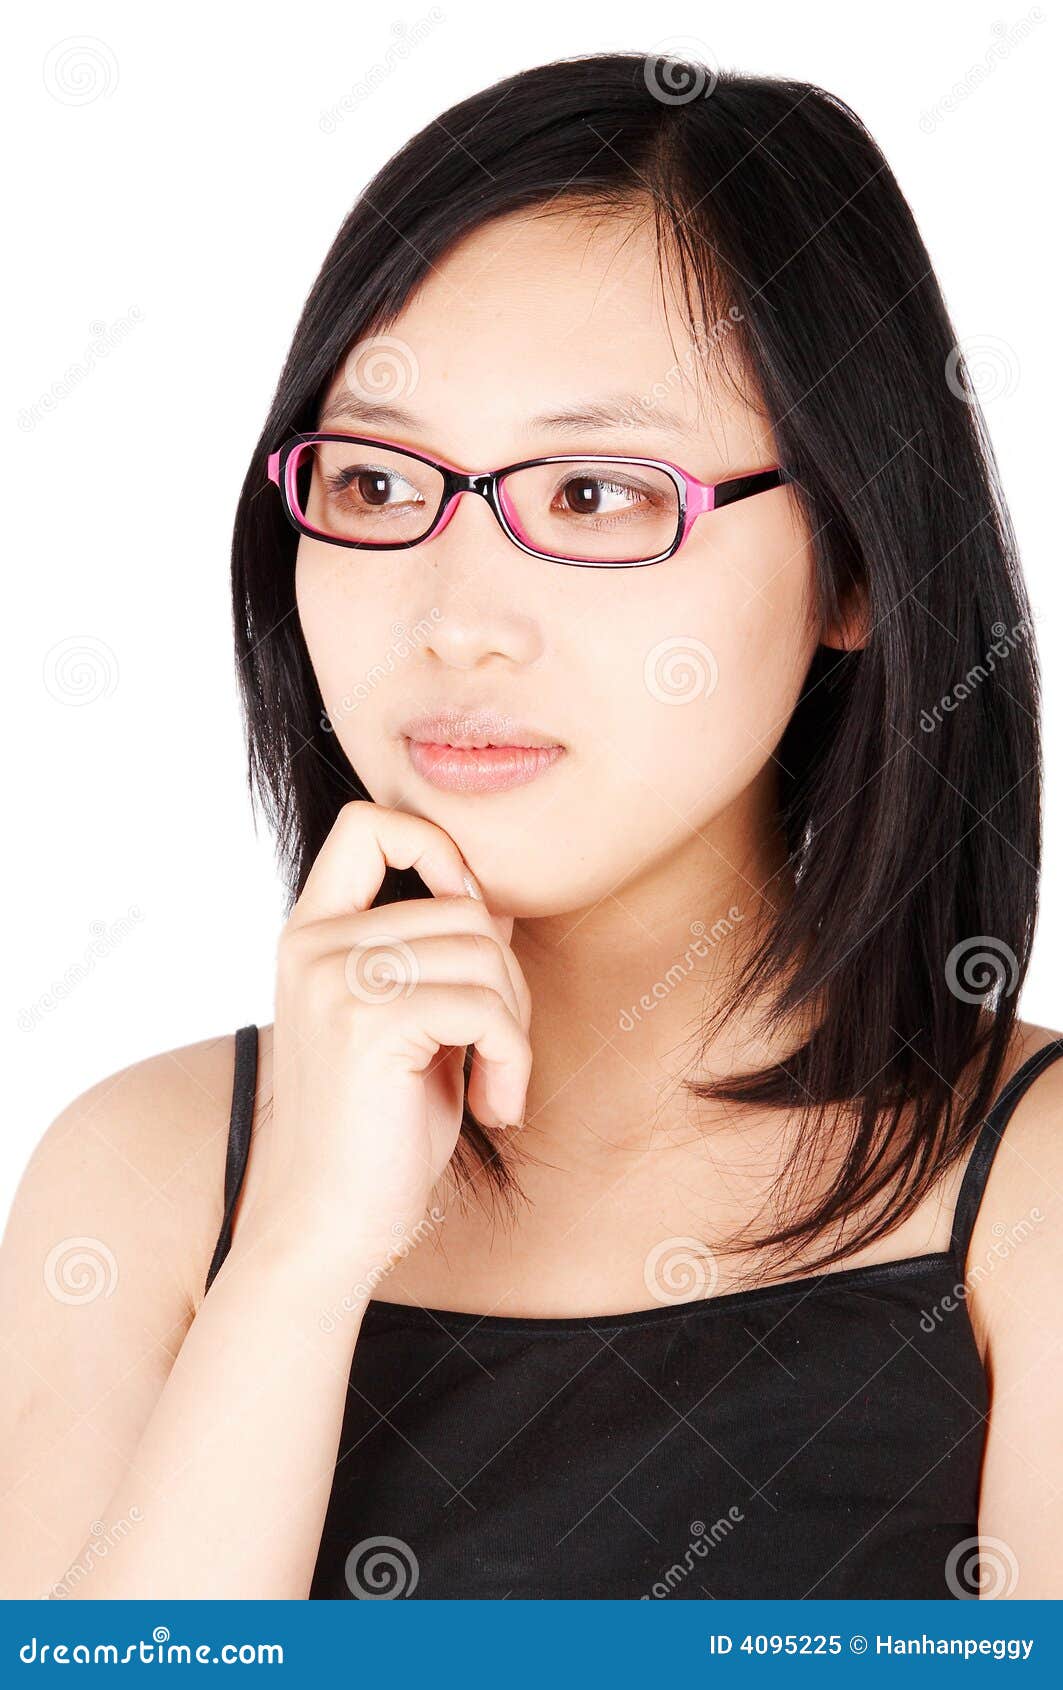 Taiwanese Girls Glasses Sex